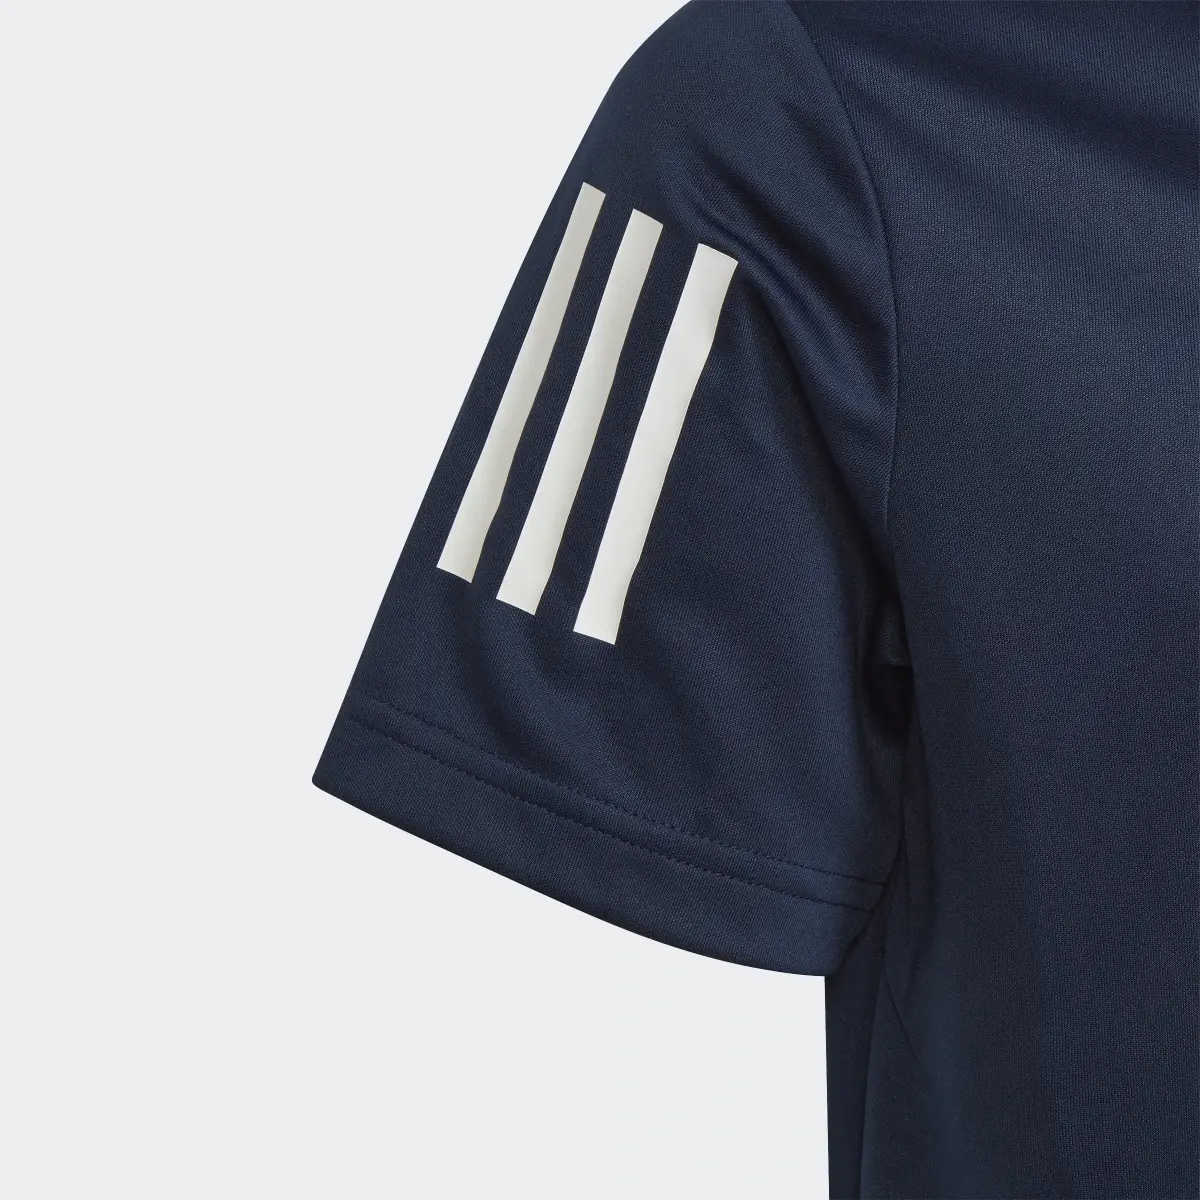 Adidas 3-Stripes Polo Shirt. 3